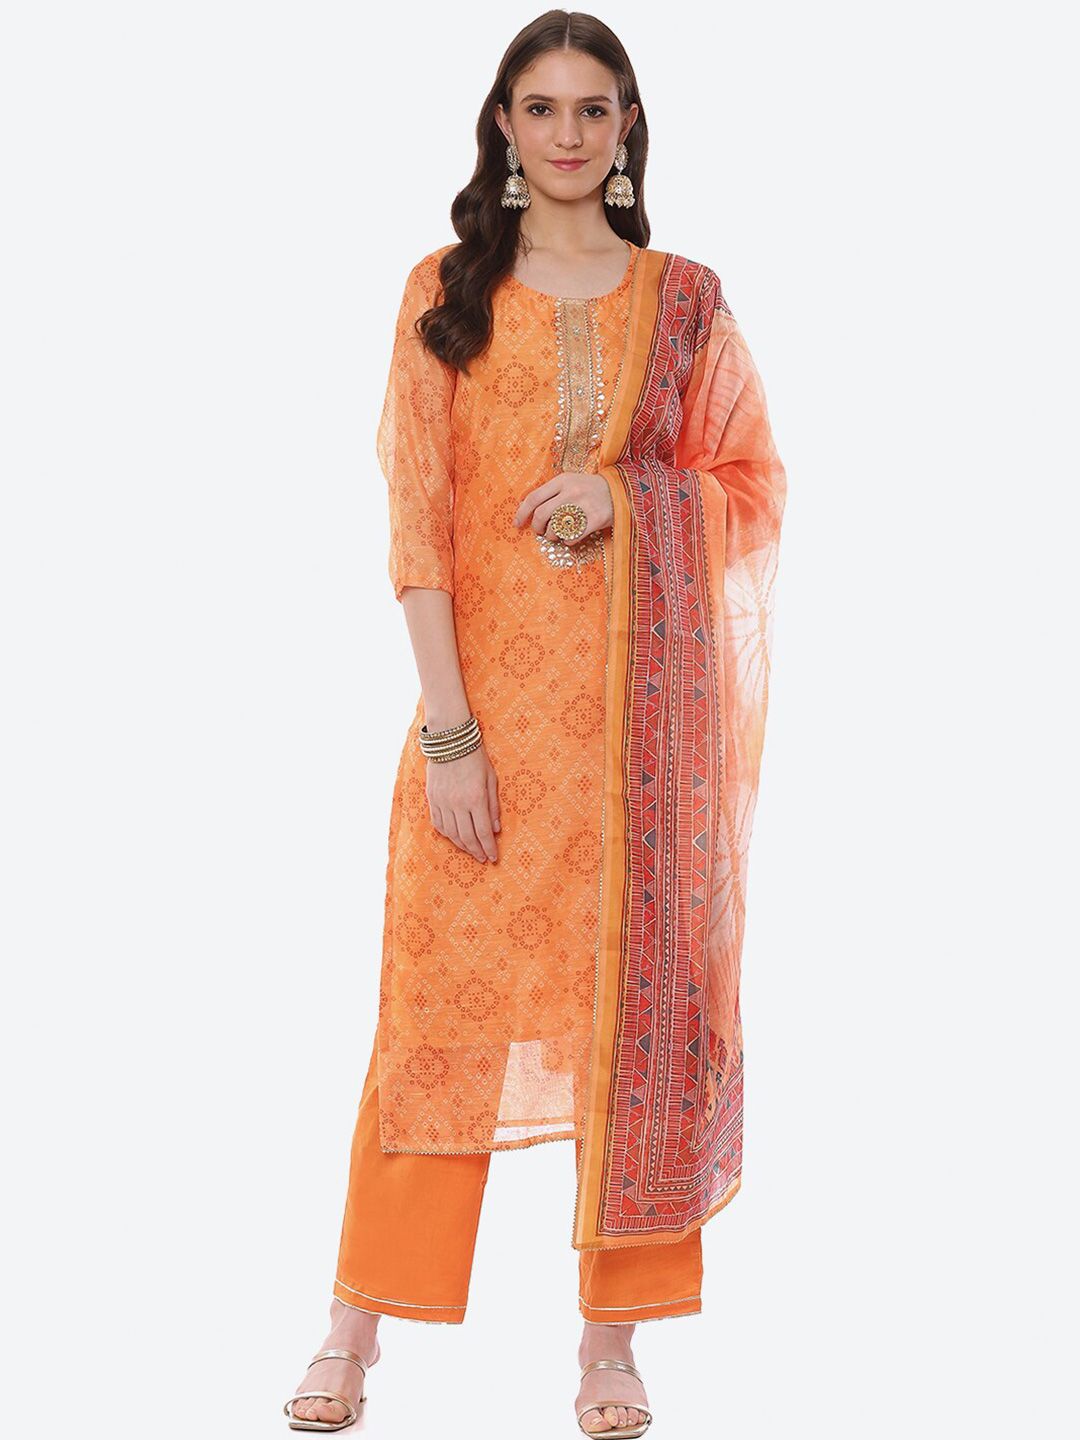 Biba Yellow & Orange Printed Unstitched Dress Material Price in India